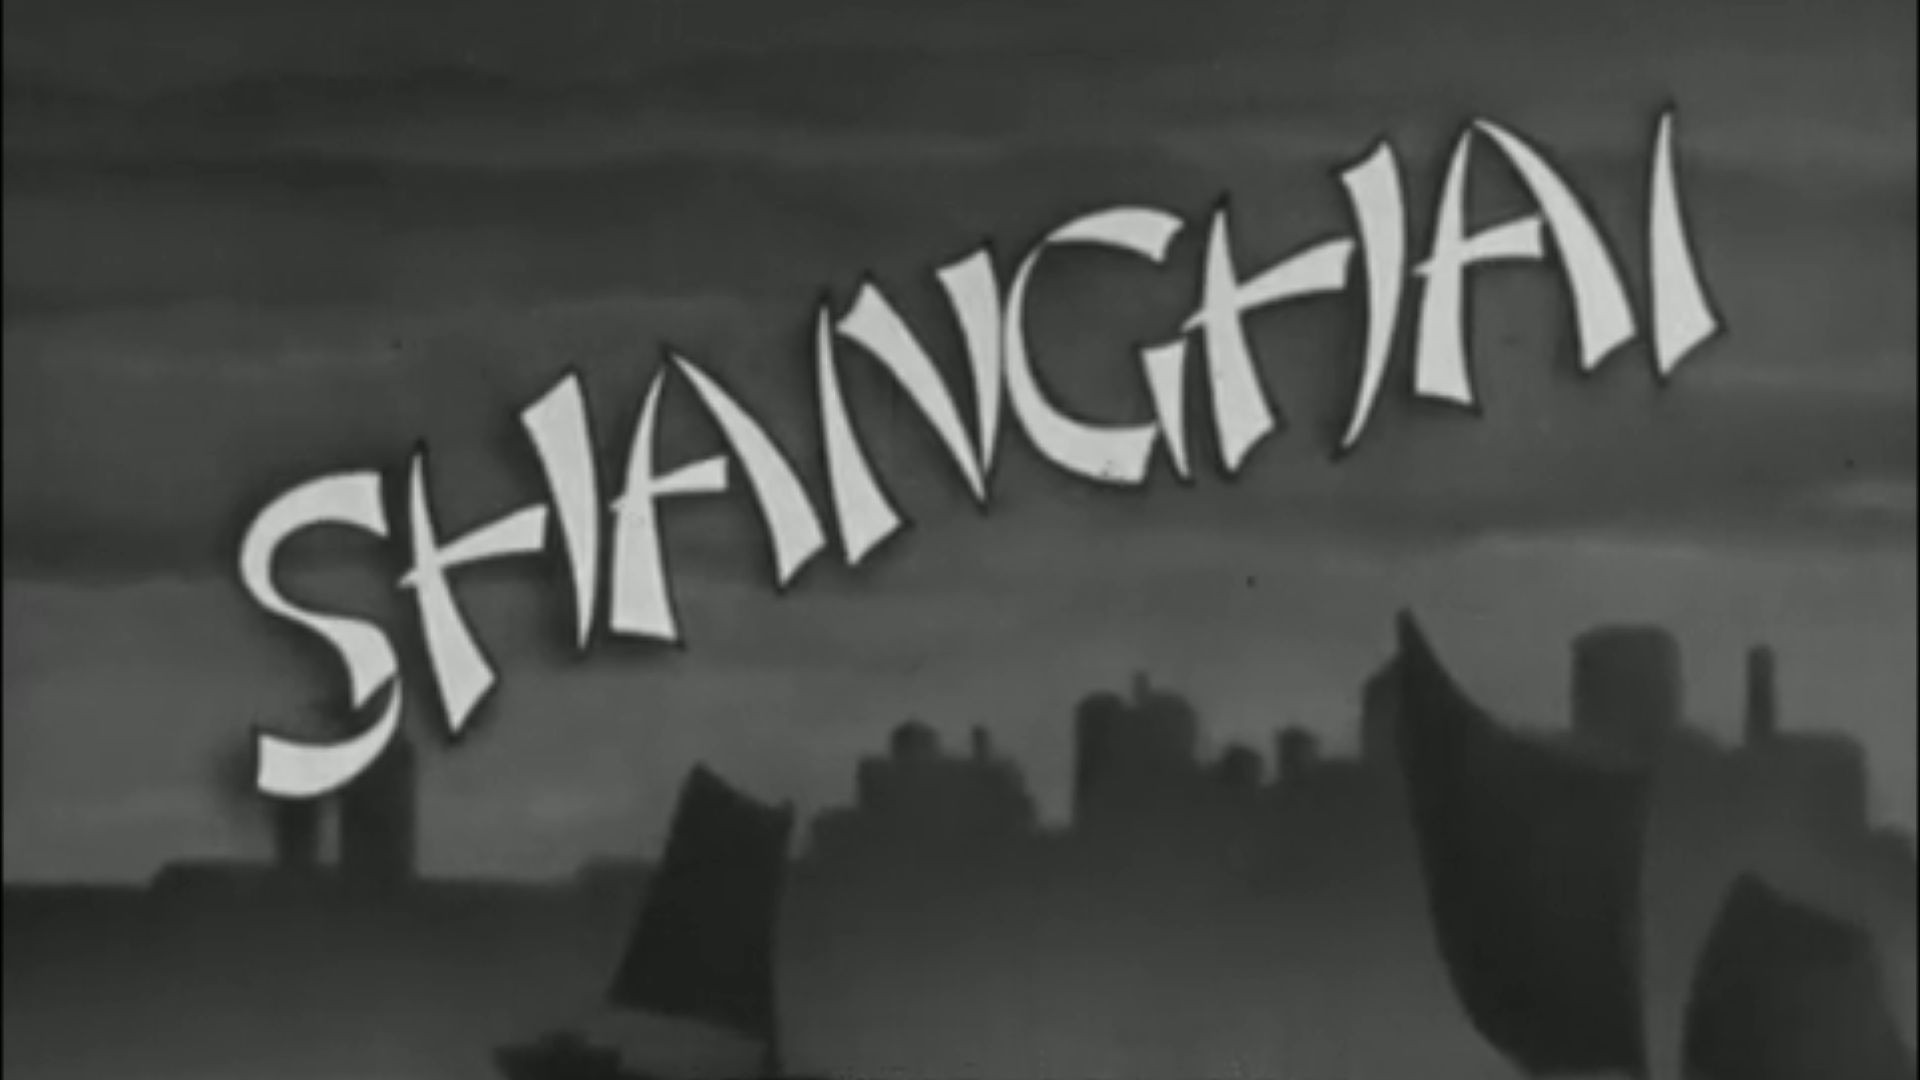 Shanghai China 1947 Travelogue Film Just Prior to Communist Victory